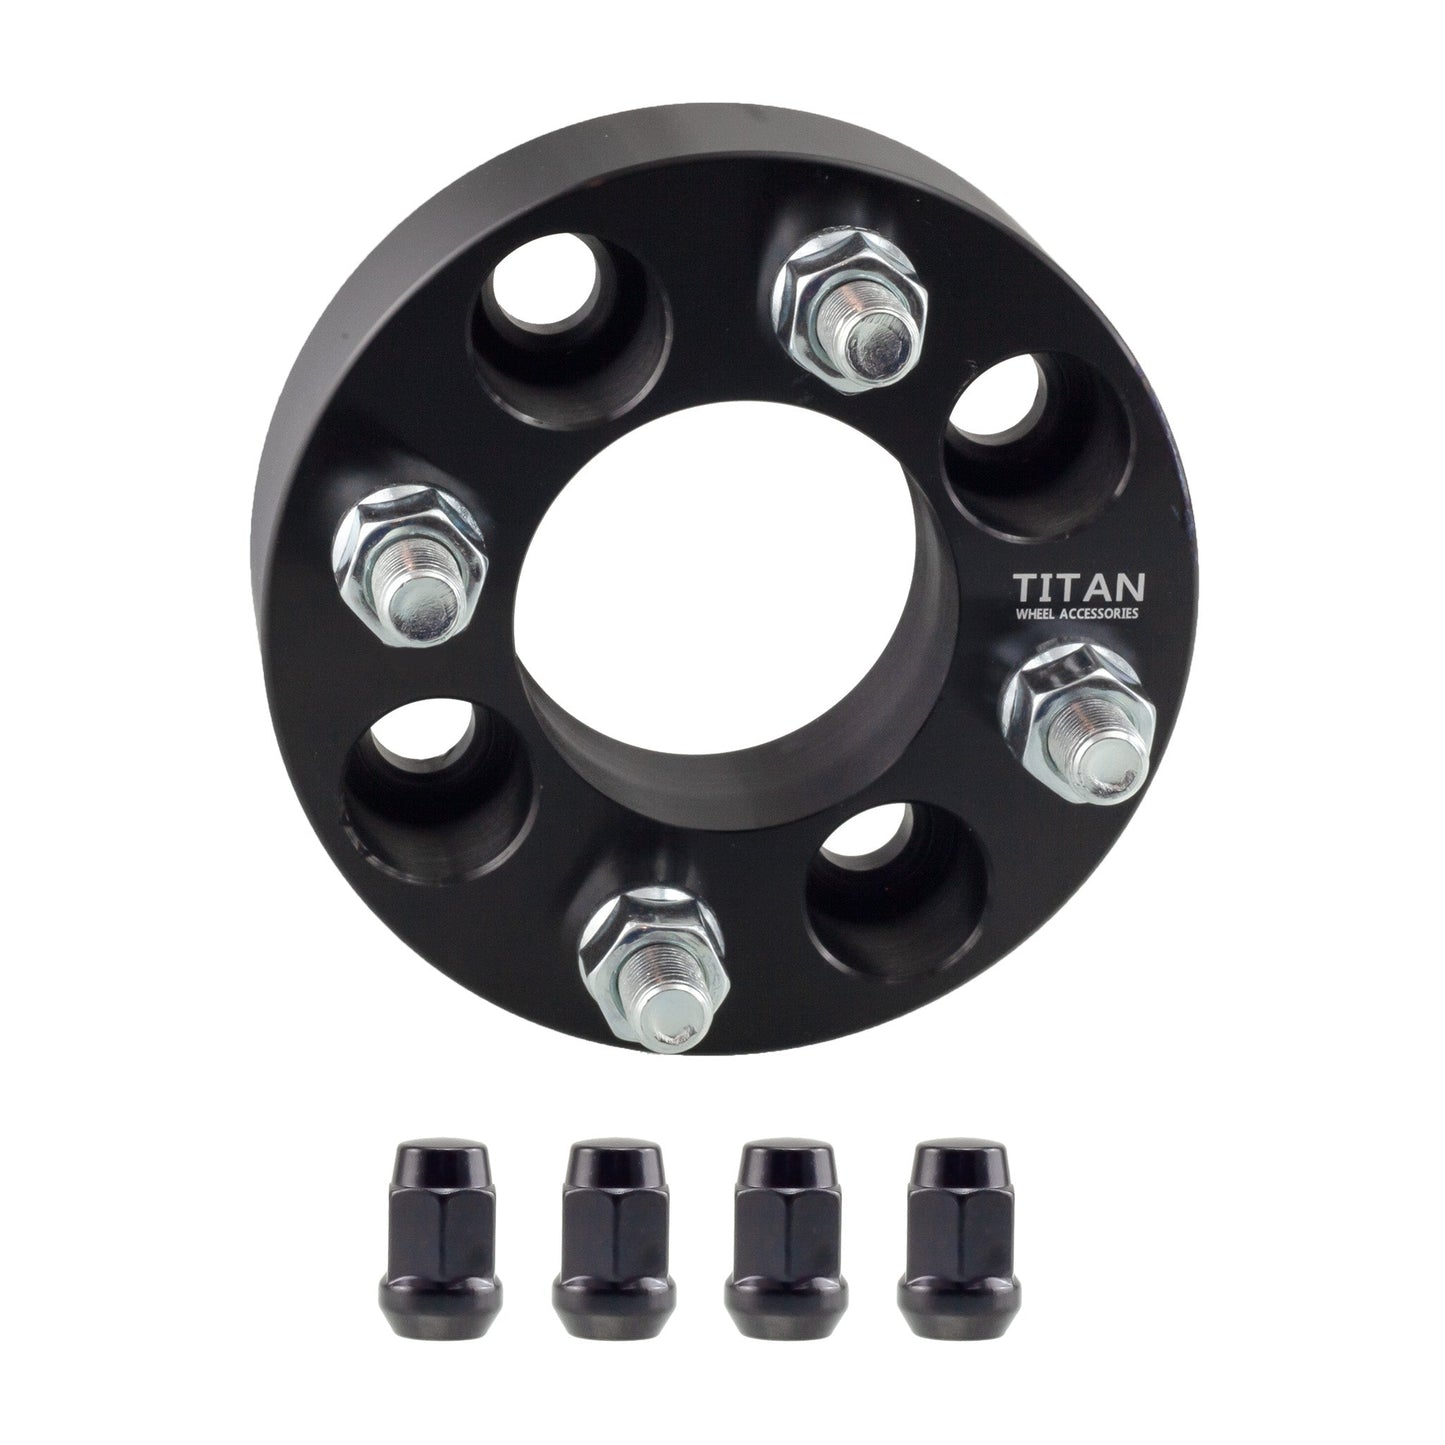 25mm (1") Titan Wheel Spacers for Honda Civic Acura Integra Mazda Protégé Miata Toyota MR2 | 4x100 | 12x1.5 Studs | Titan Wheel Accessories